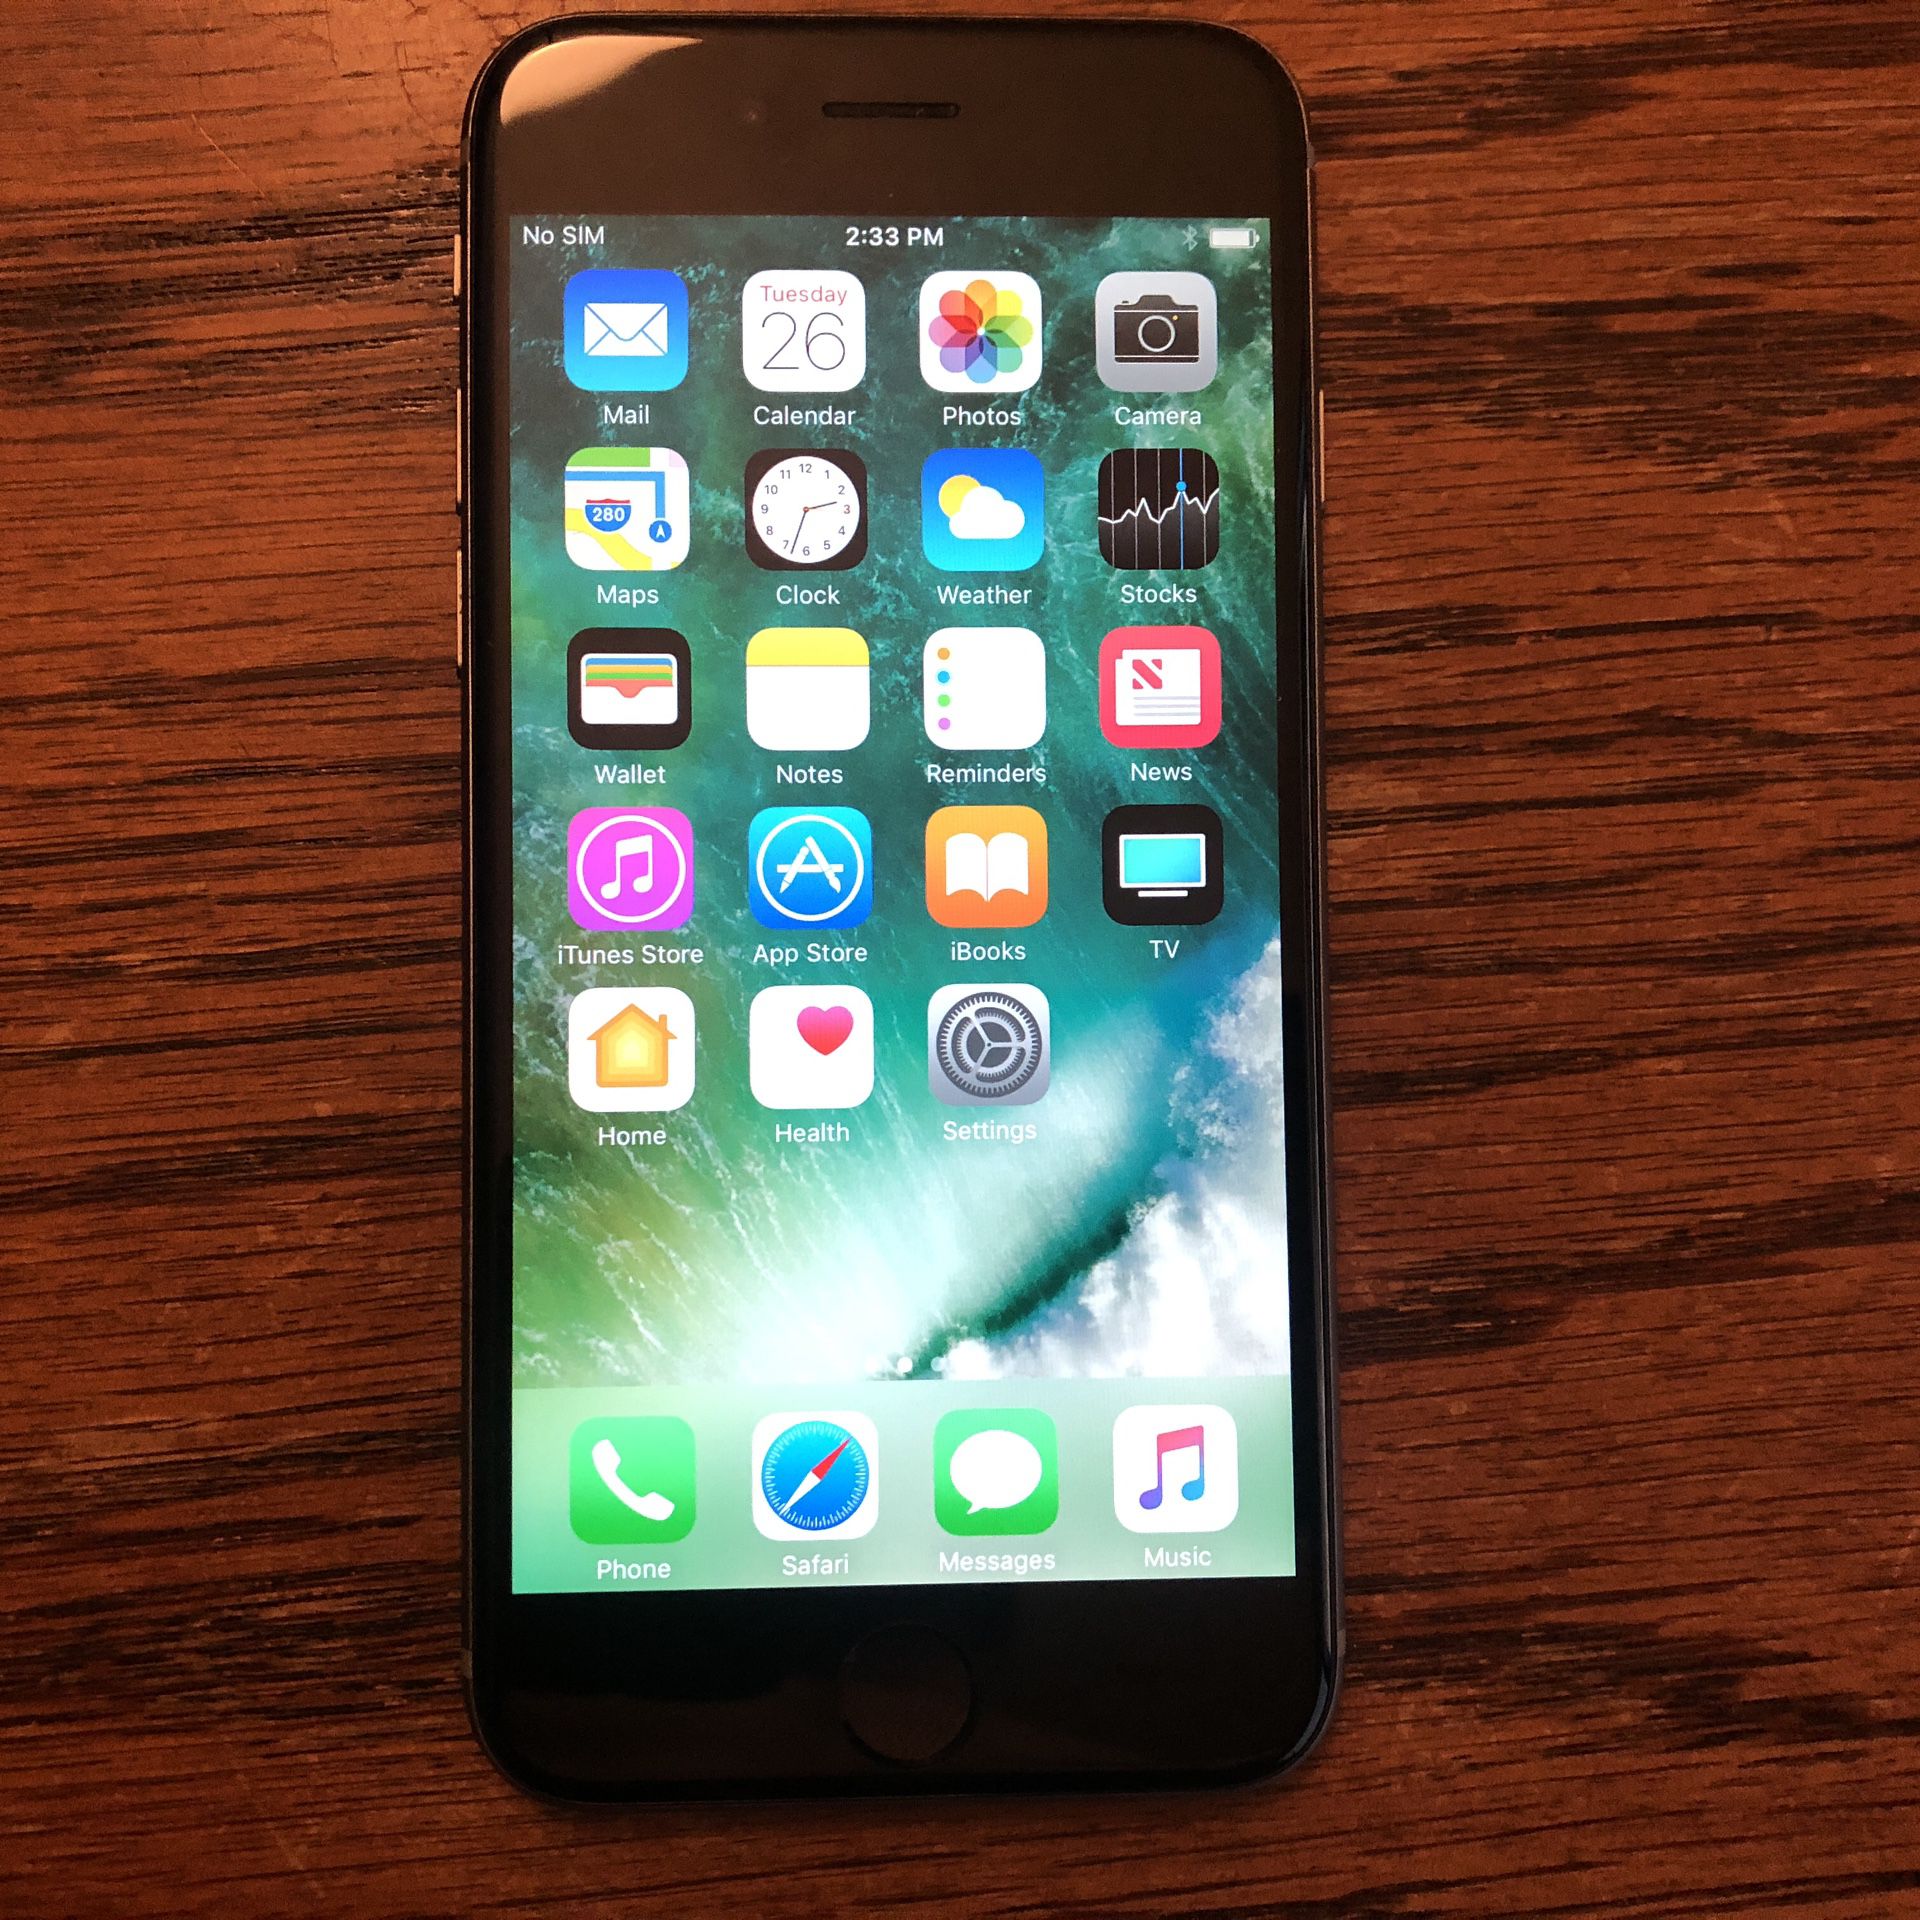 iPhone 6 Carrier Unlocked 16GB Black/Gray iCloud Clear Clean IMEI